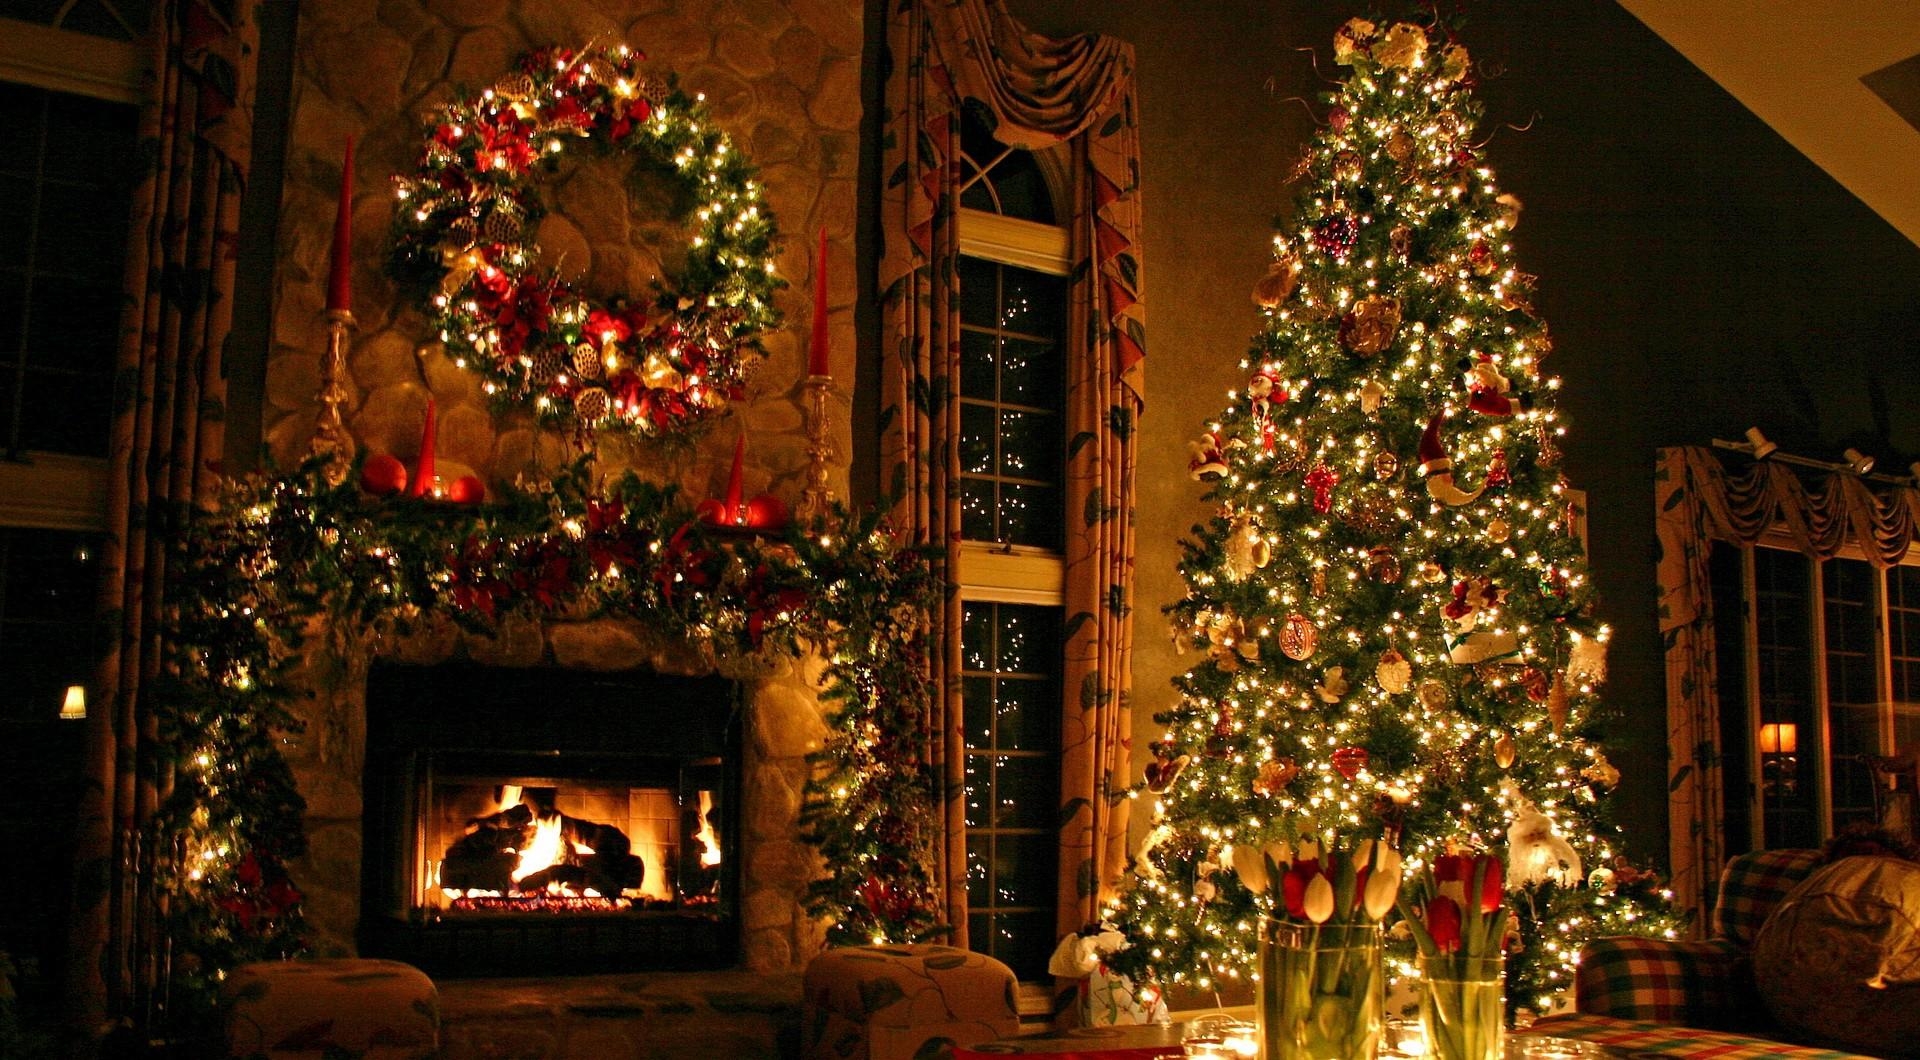 HD wallpaper comfort, holidays, flowers, decorations, holiday, house, christmas decorations, christmas tree toys, christmas tree, coziness, fireplace